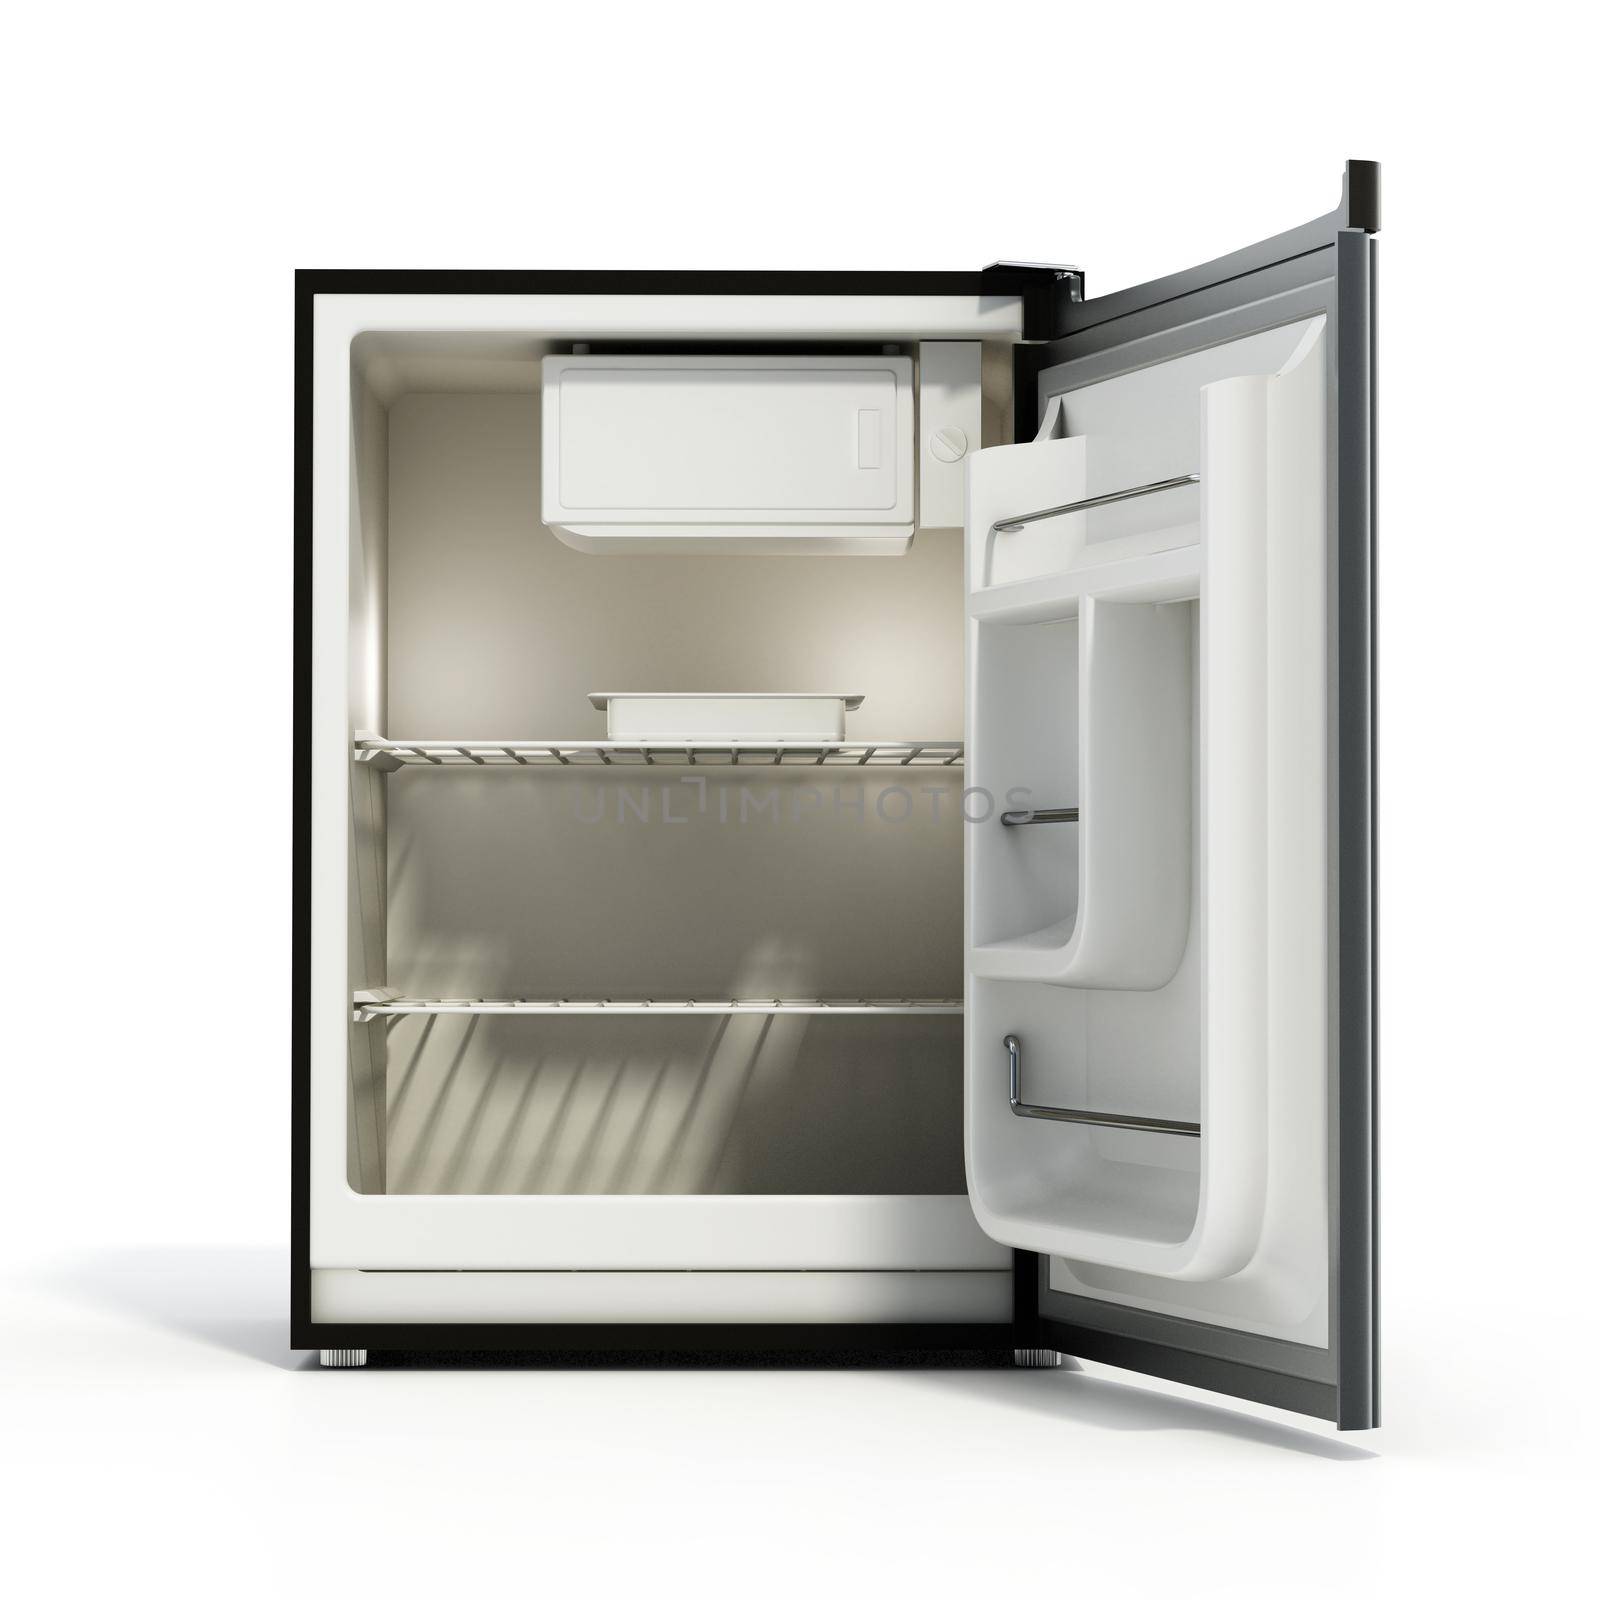 Mini refrigerator isolated on white background. 3D illustration.